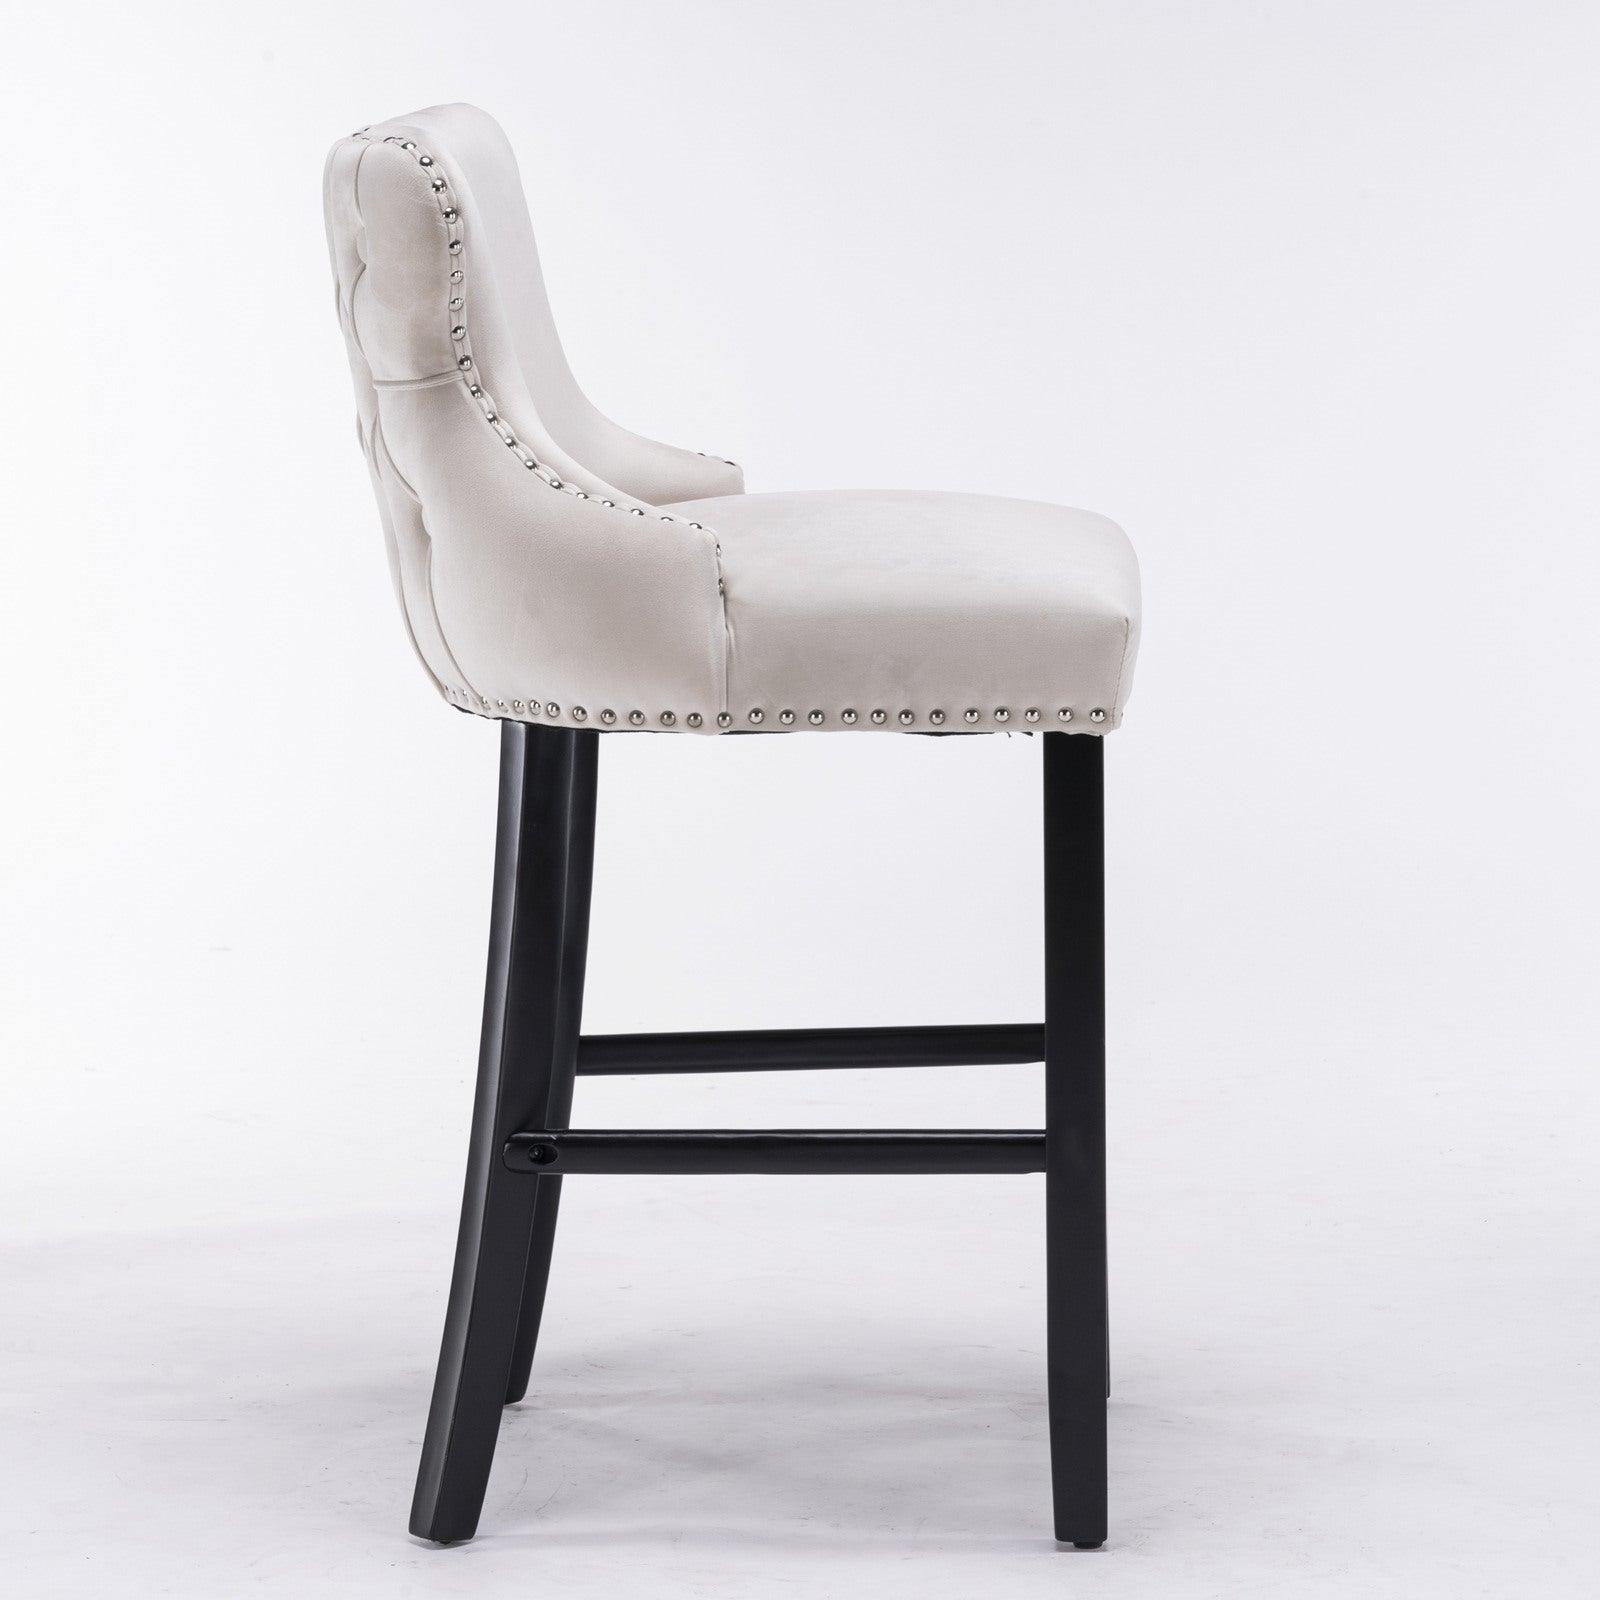 Contemporary Velvet Upholstered Wing-Back Barstools, Bar stools, Set of 2 FredCo